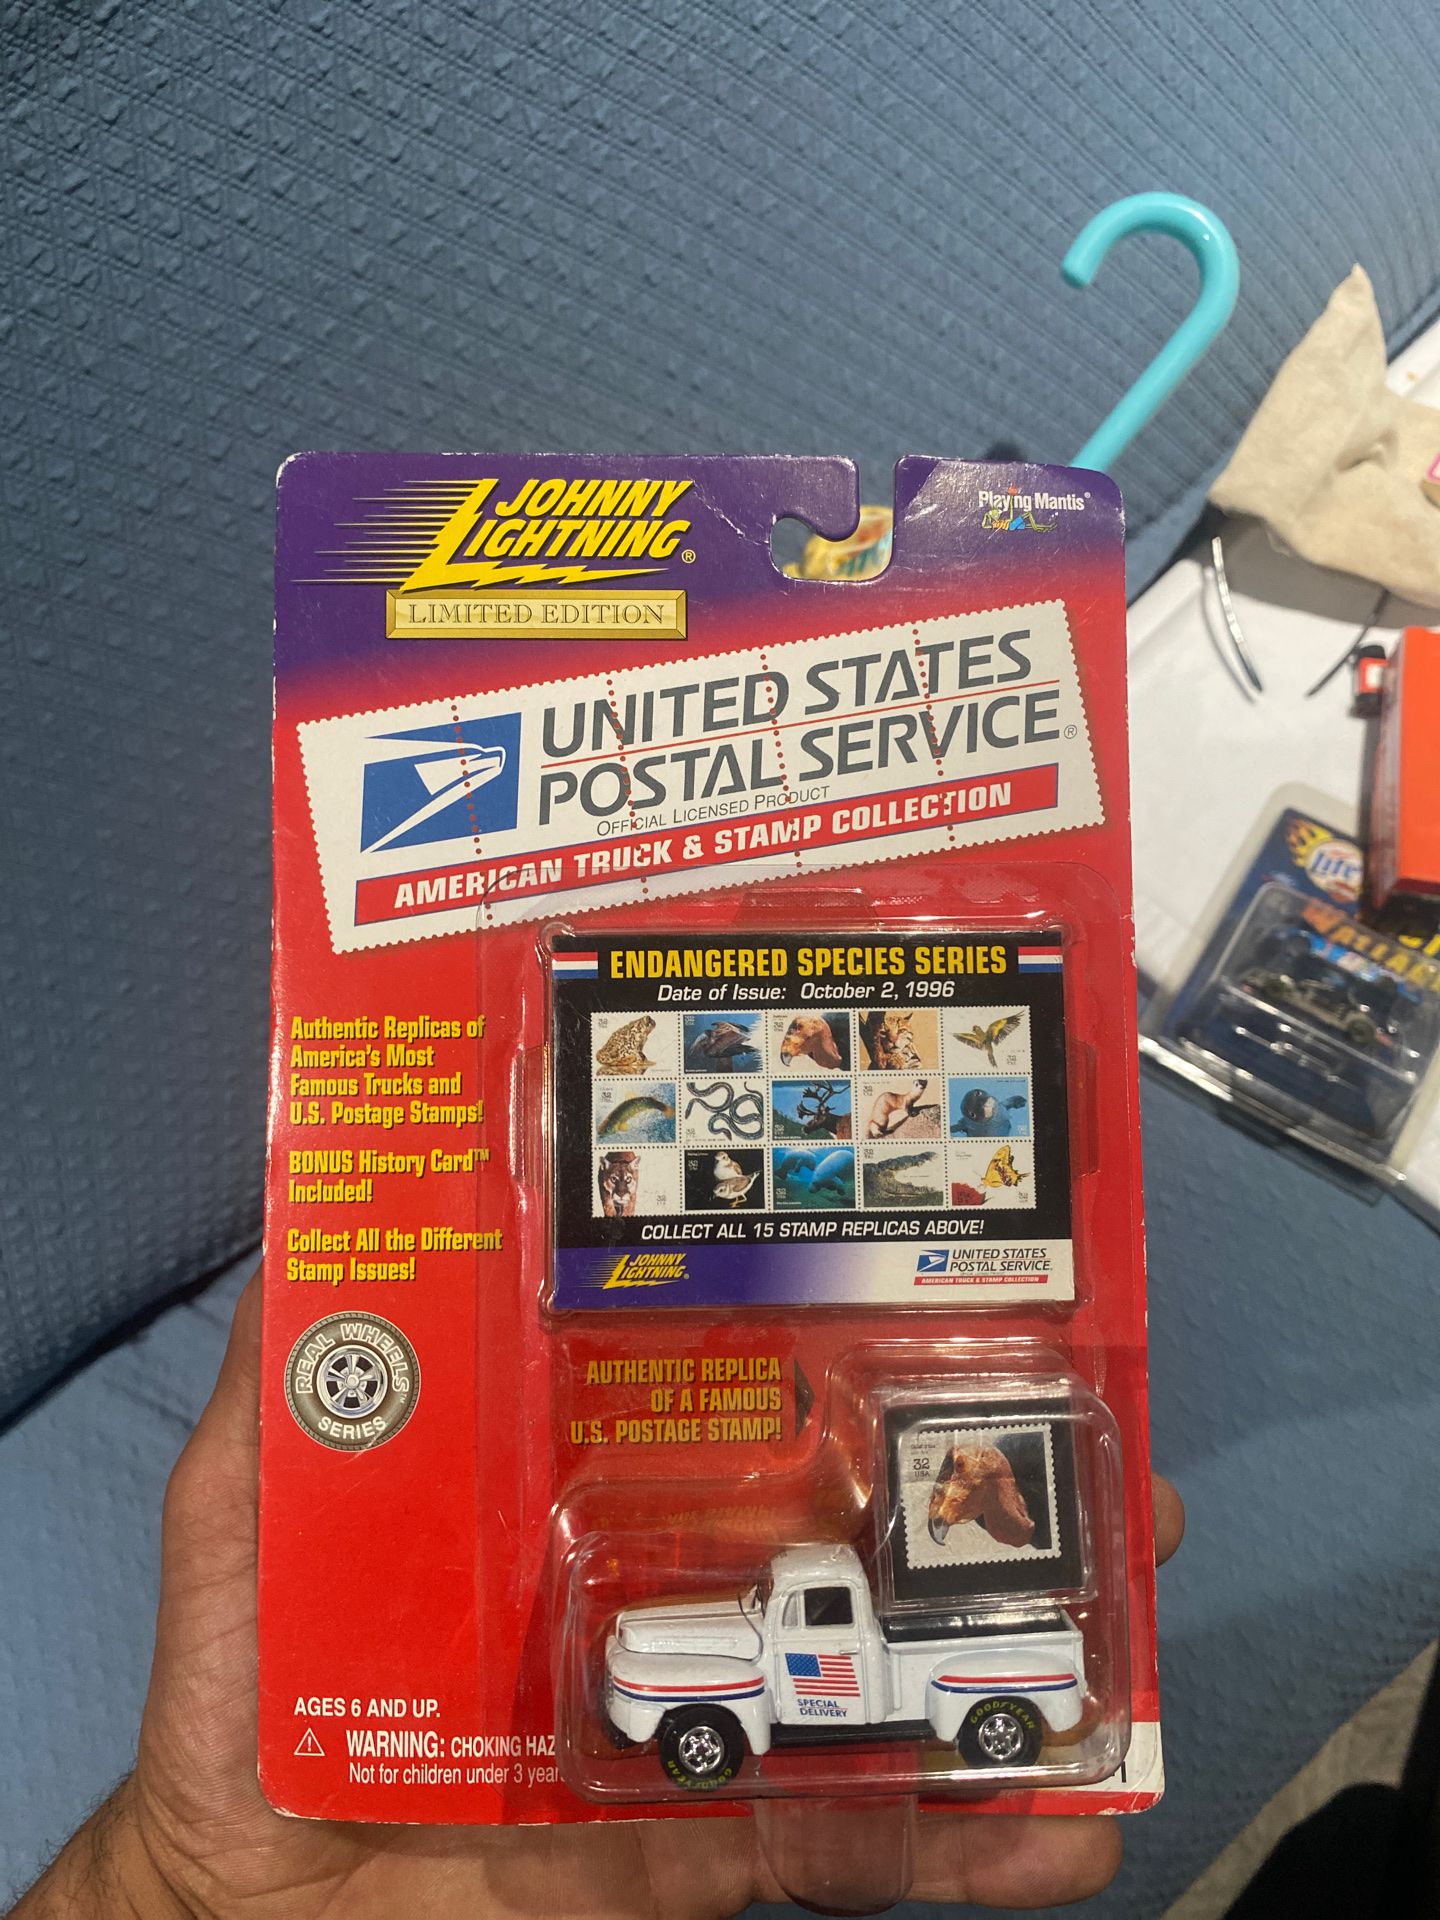 Limit addition Jonny lightning hot wheels United States Postal Service truck stamp collection